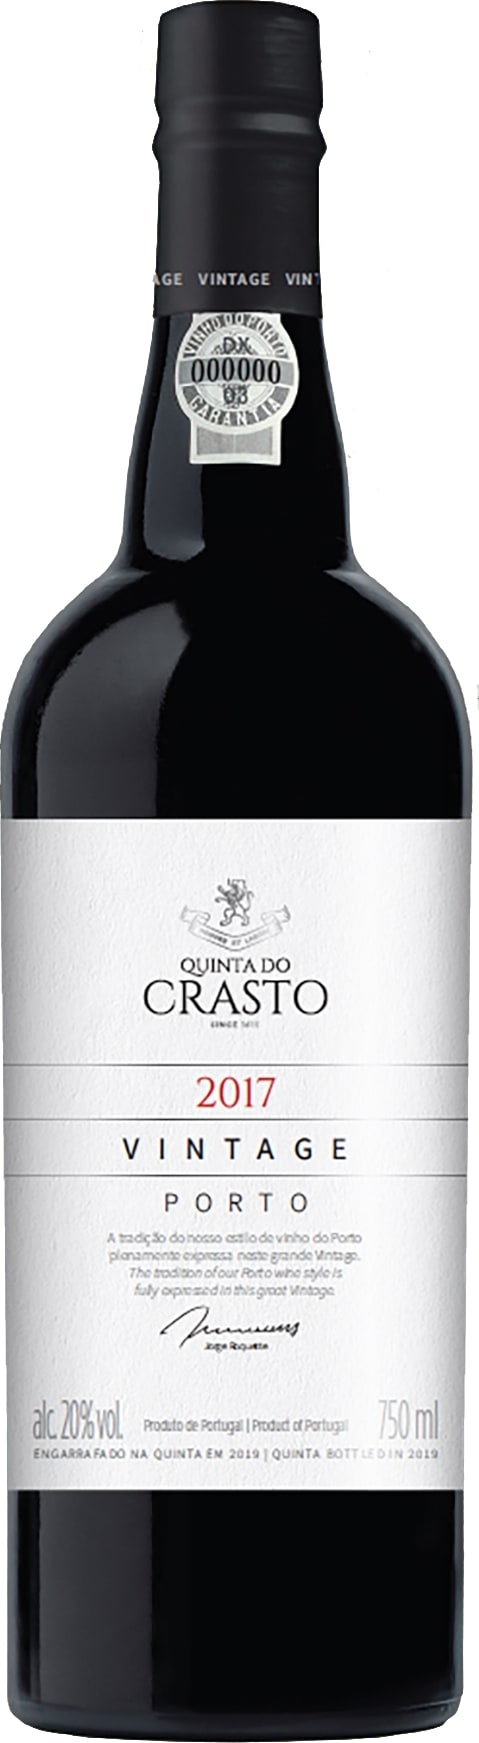 Quinta Do Crasto Vintage Port 2018 75cl - Buy Quinta Do Crasto Wines from GREAT WINES DIRECT wine shop